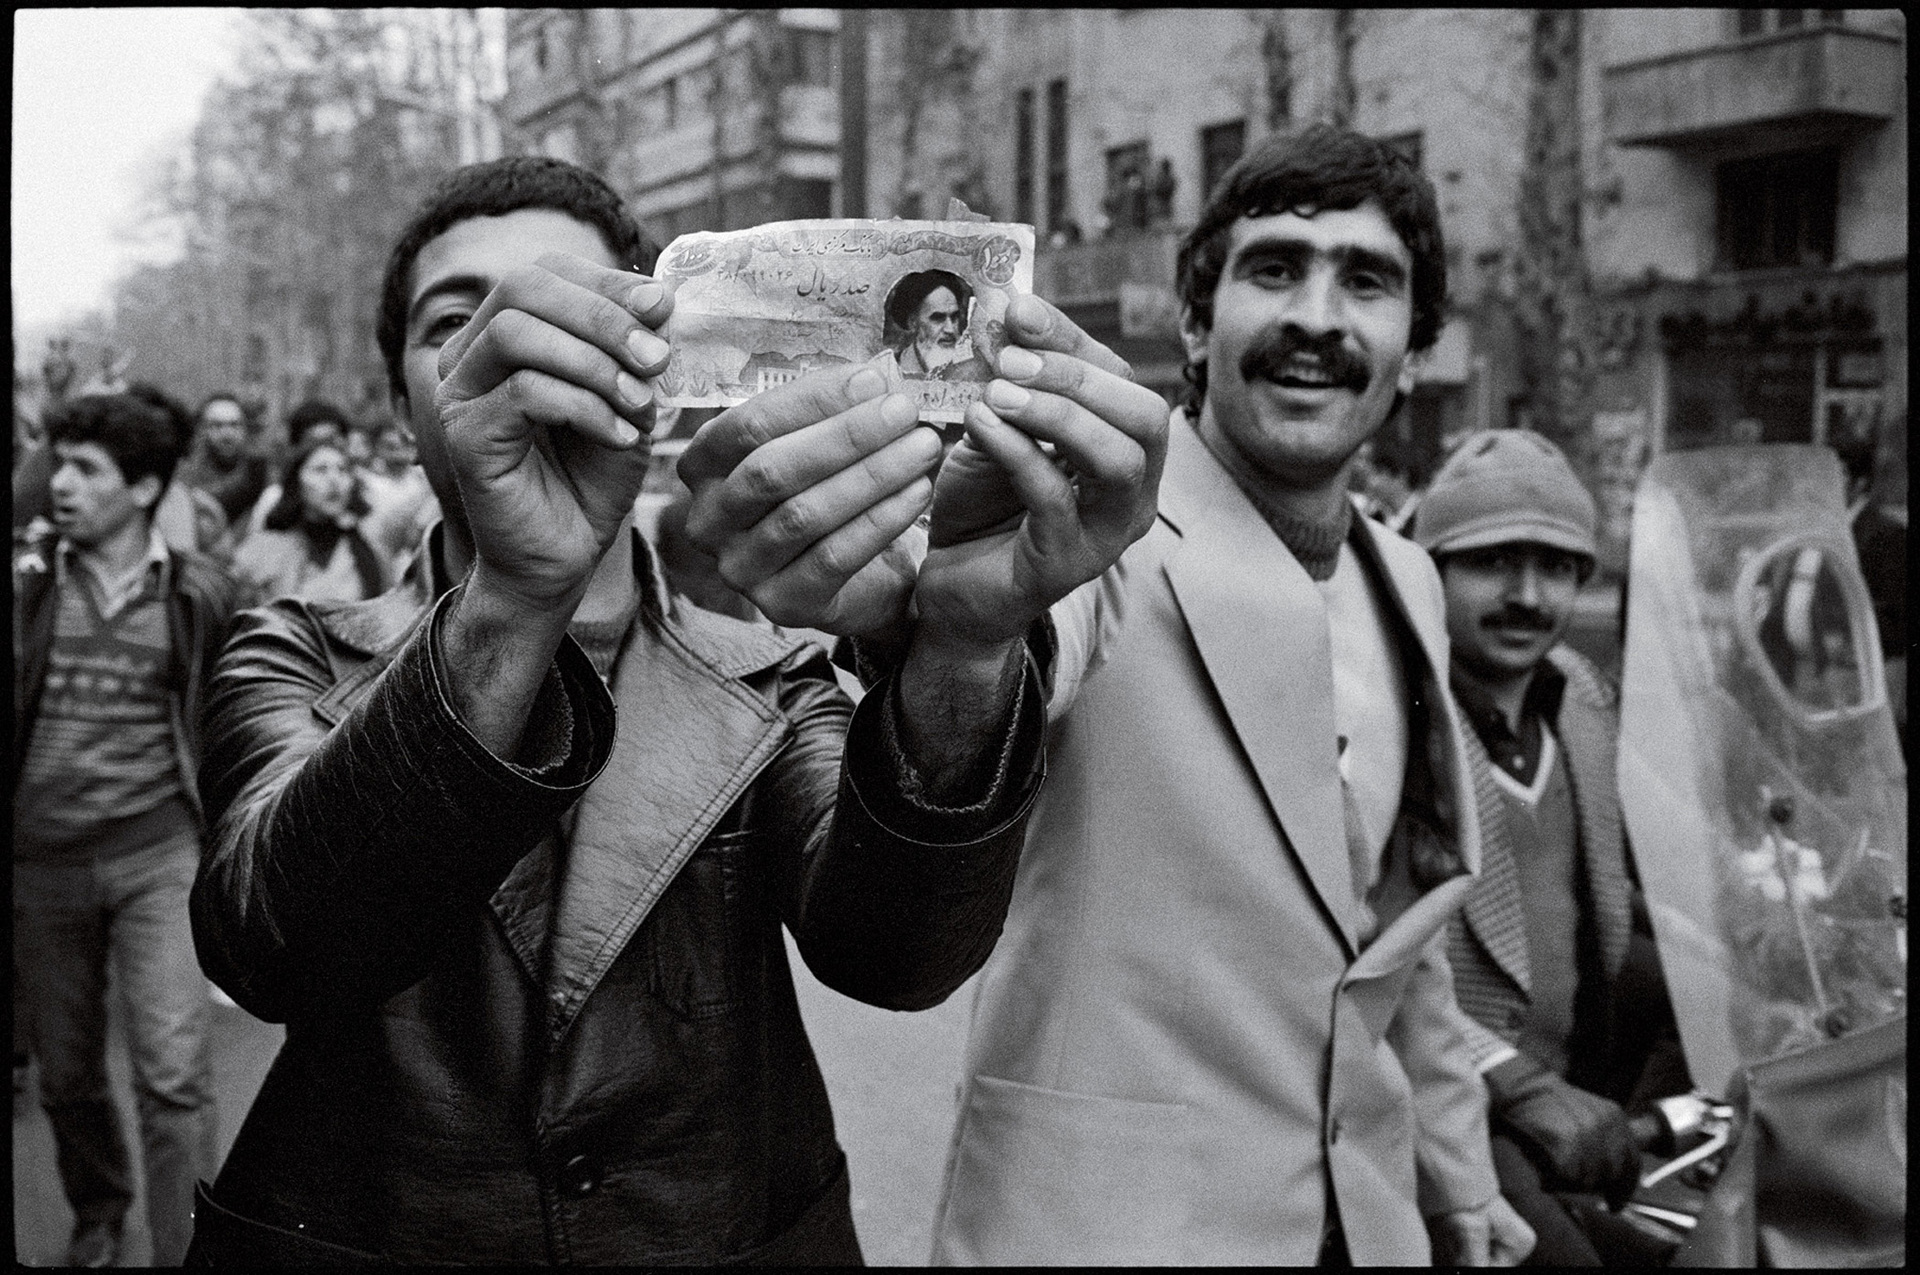 Tehran erupts in joy, with news of the Shah's departure. : 44 Days: the Iranian Revolution : David Burnett | Photographer